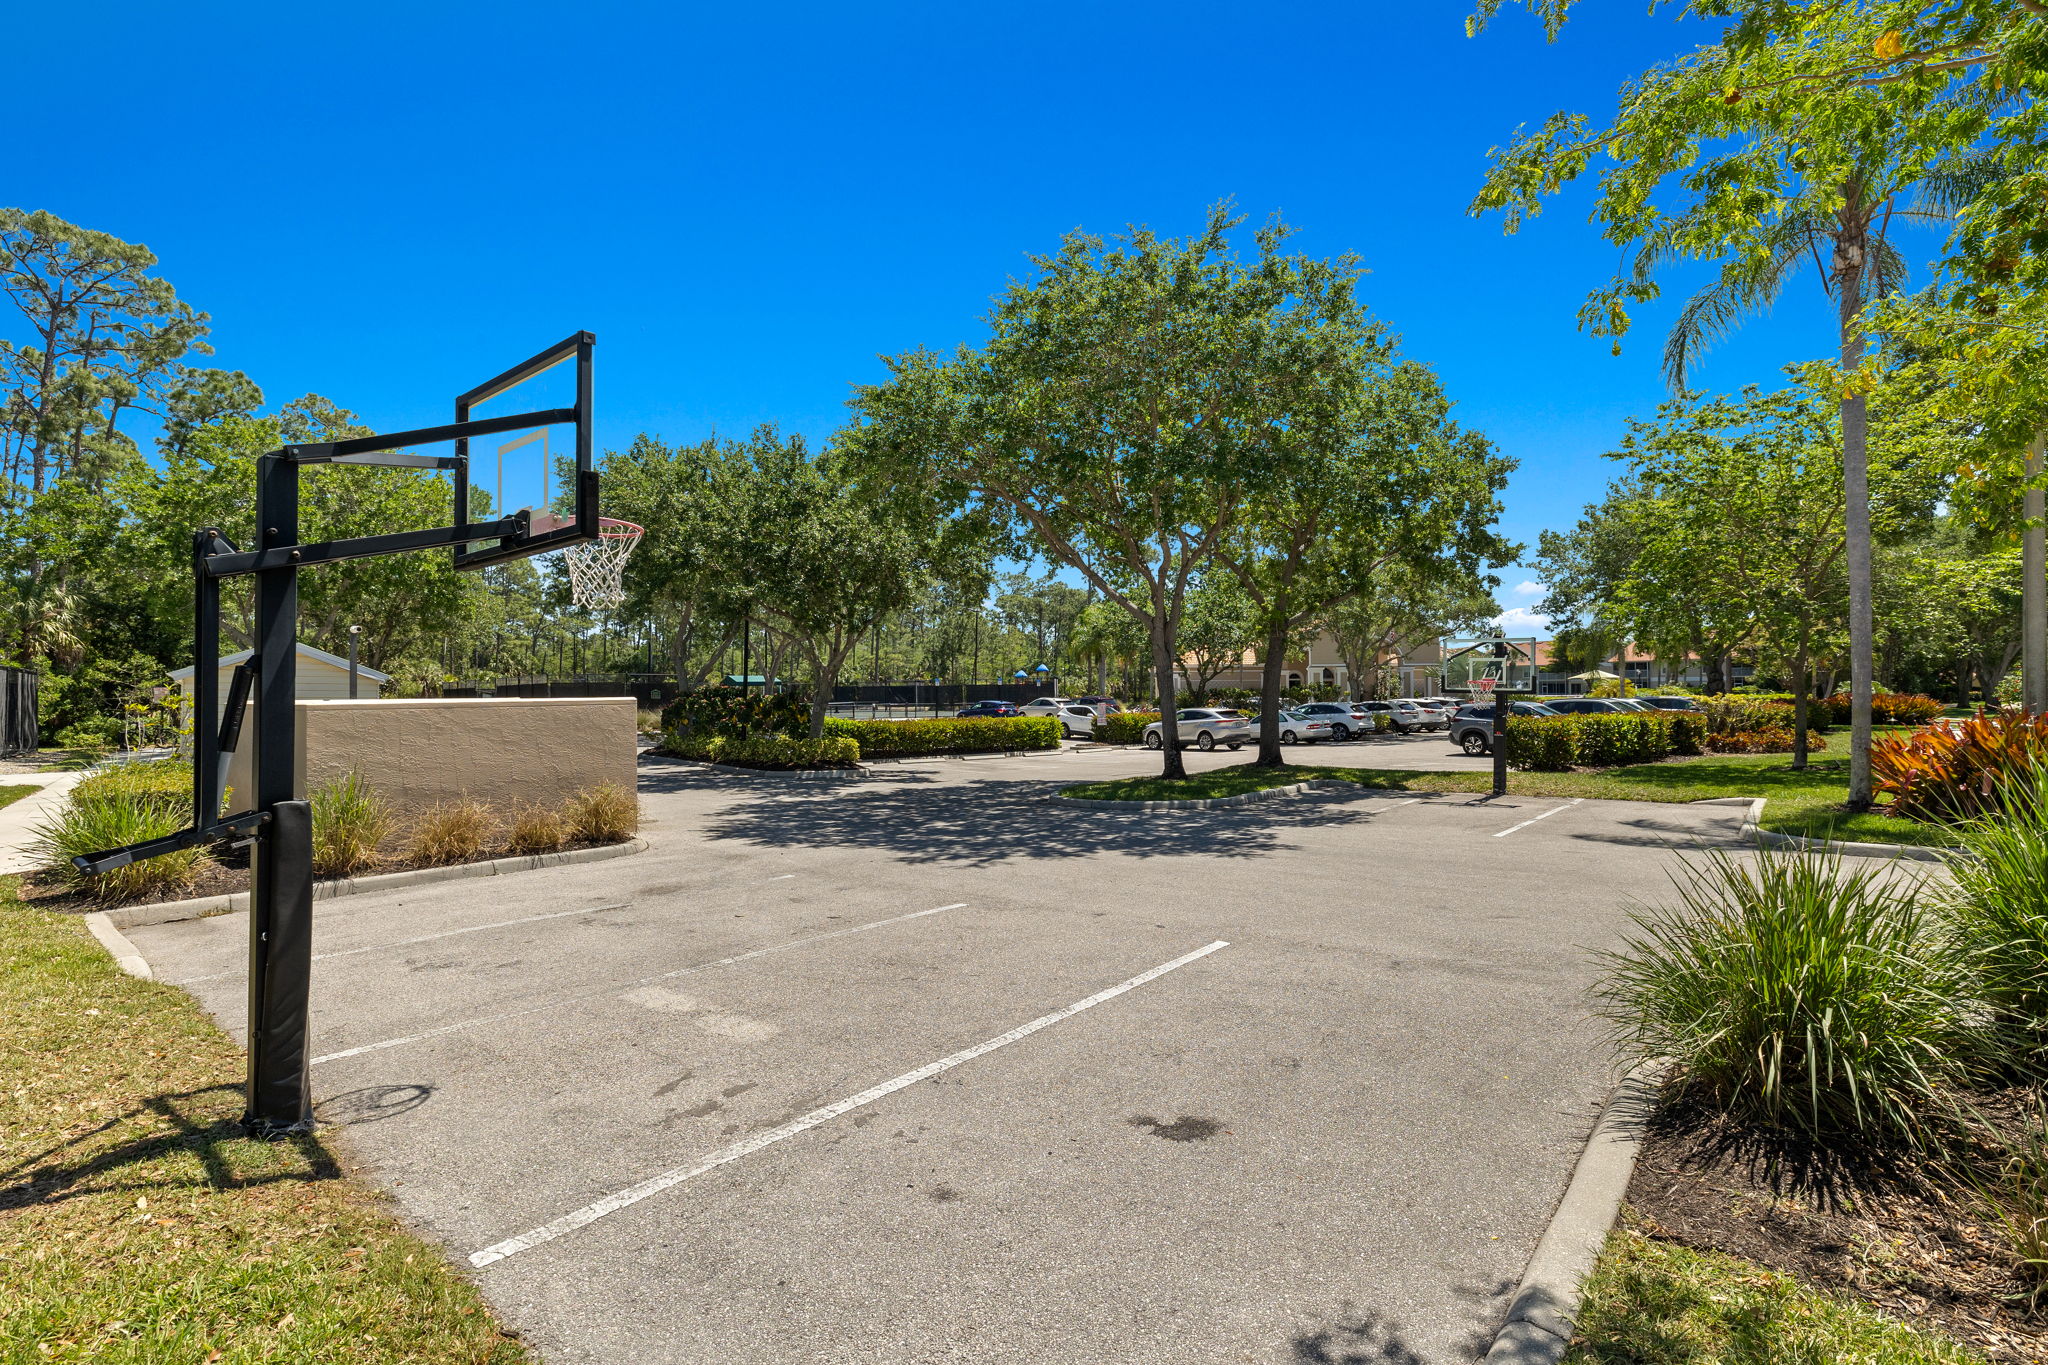 Amenity - Basketball Court